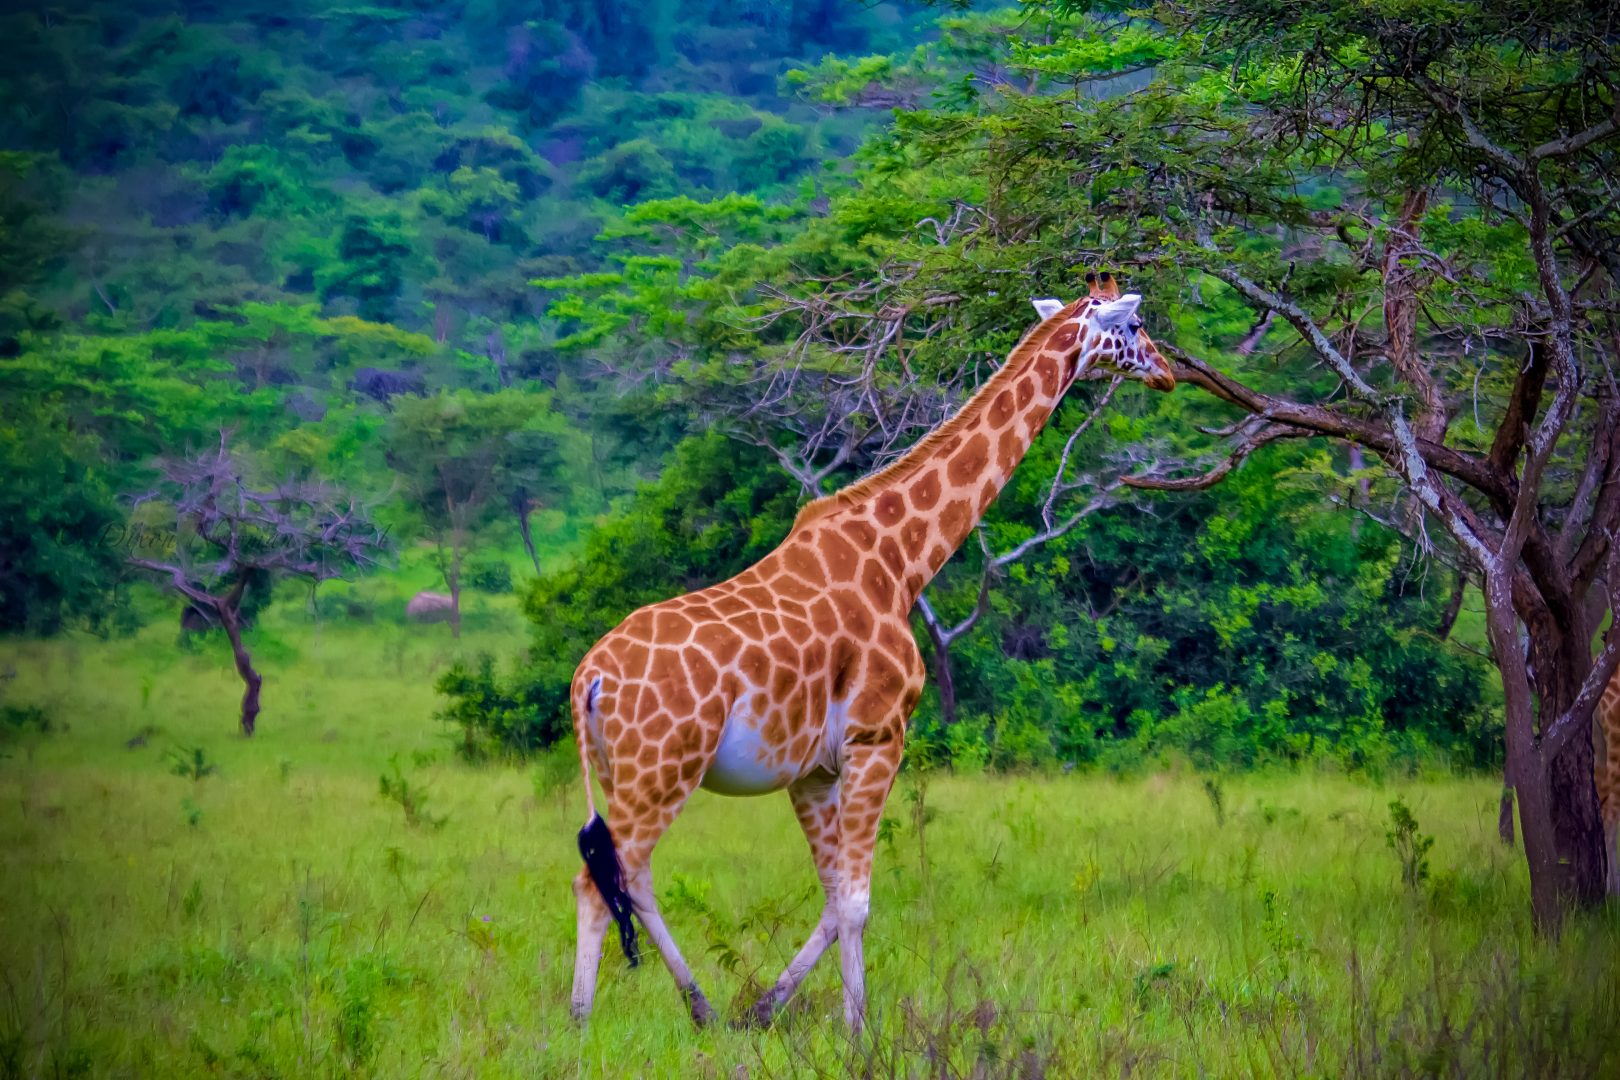 An adult Rothschild's giraffe in Lake Mburo National Park